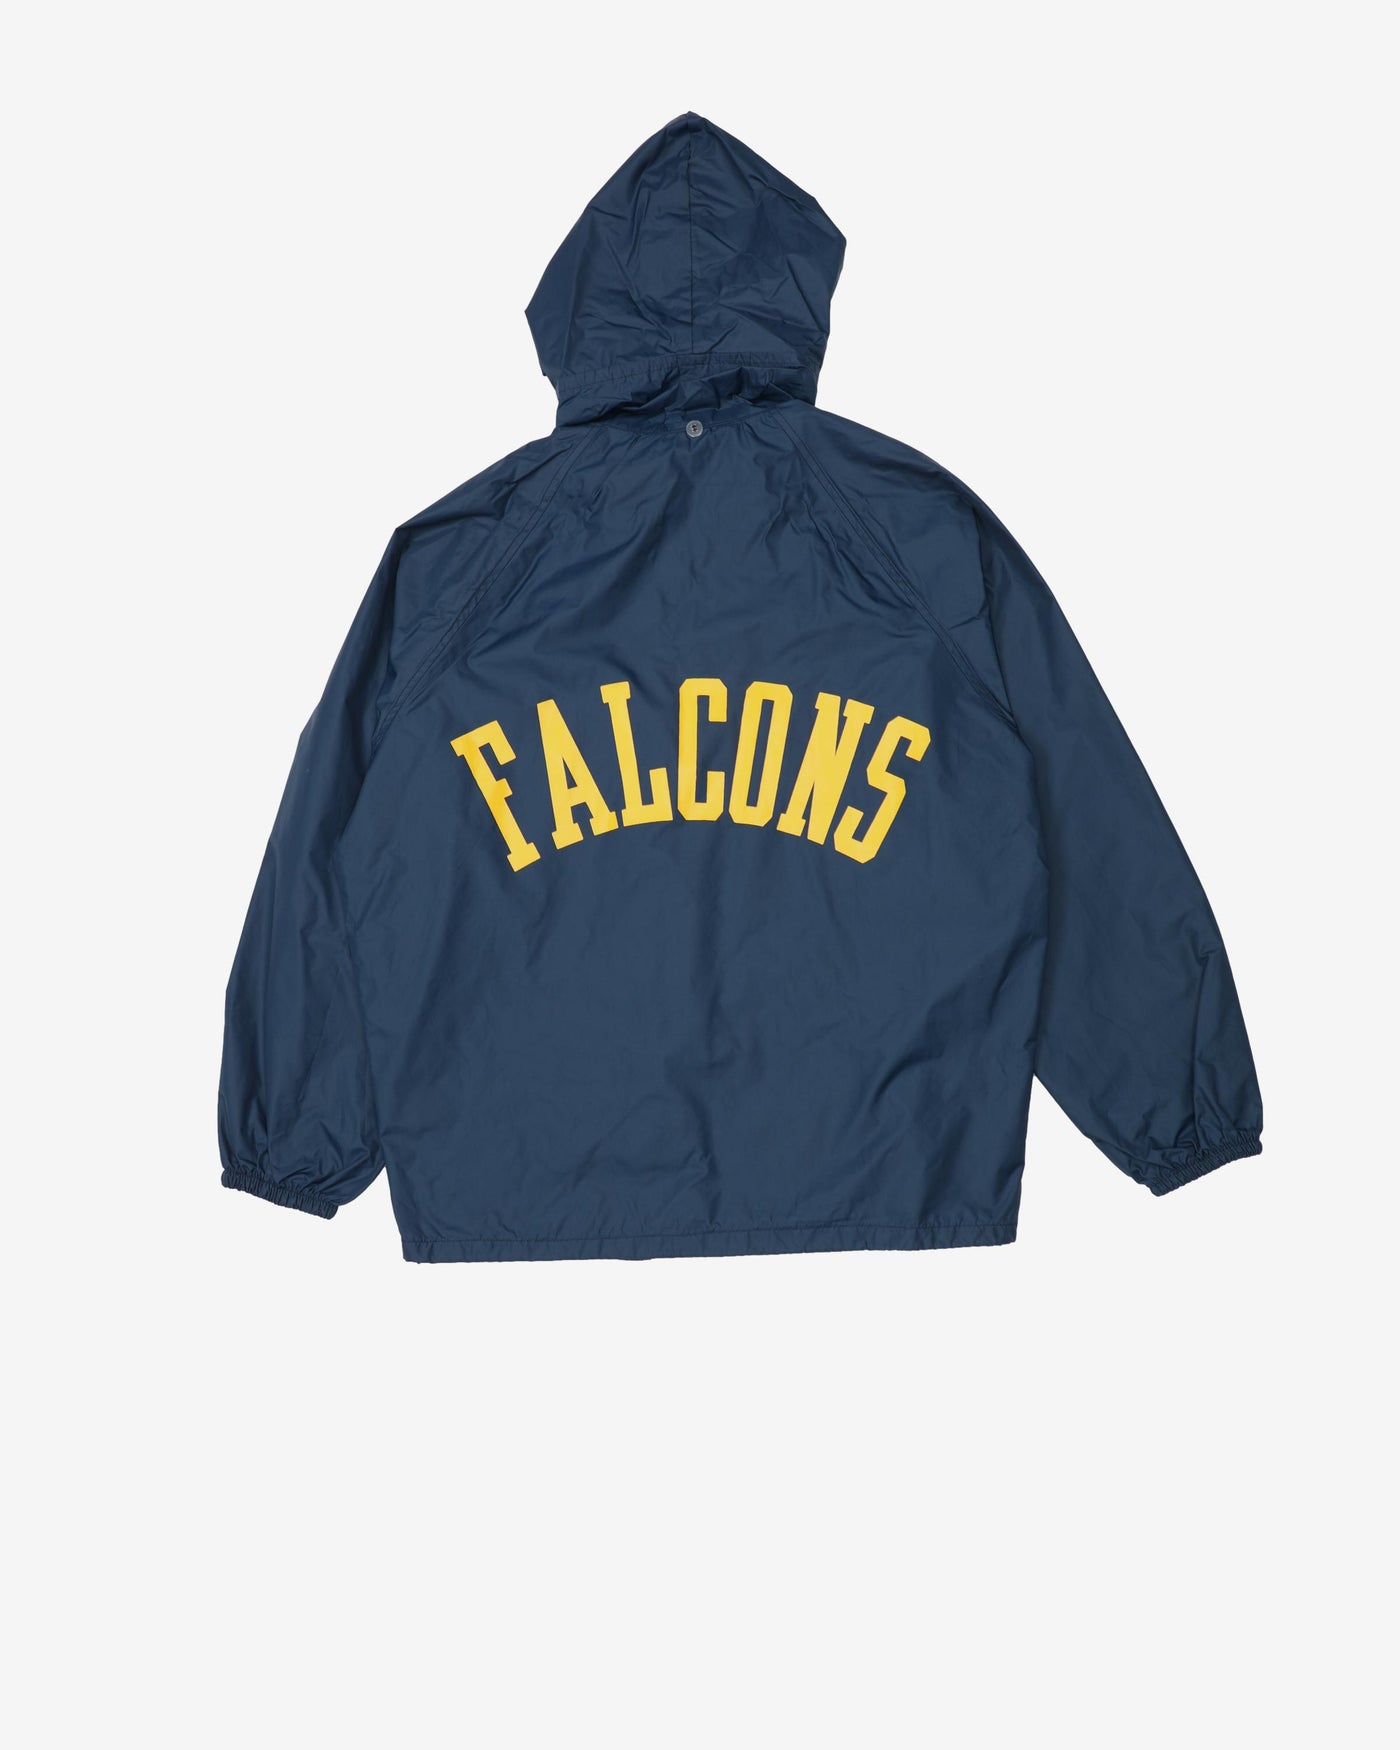 Vintage 80s Champion Navy #8 Falcons Hooded Windbreaker Sports Jacket - M